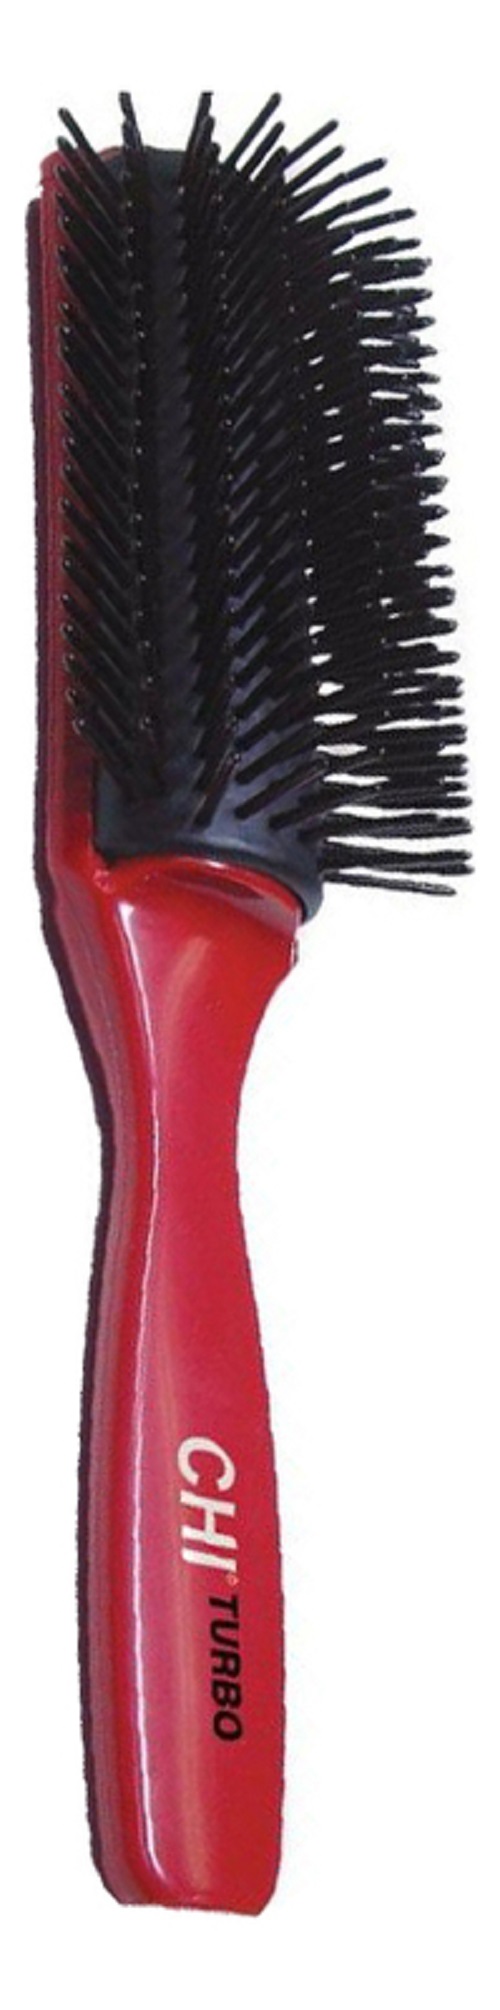 Расческа для волос Chi Turbo Styling Brush расческа moroccanoil ceramic ionic brush 45 мм